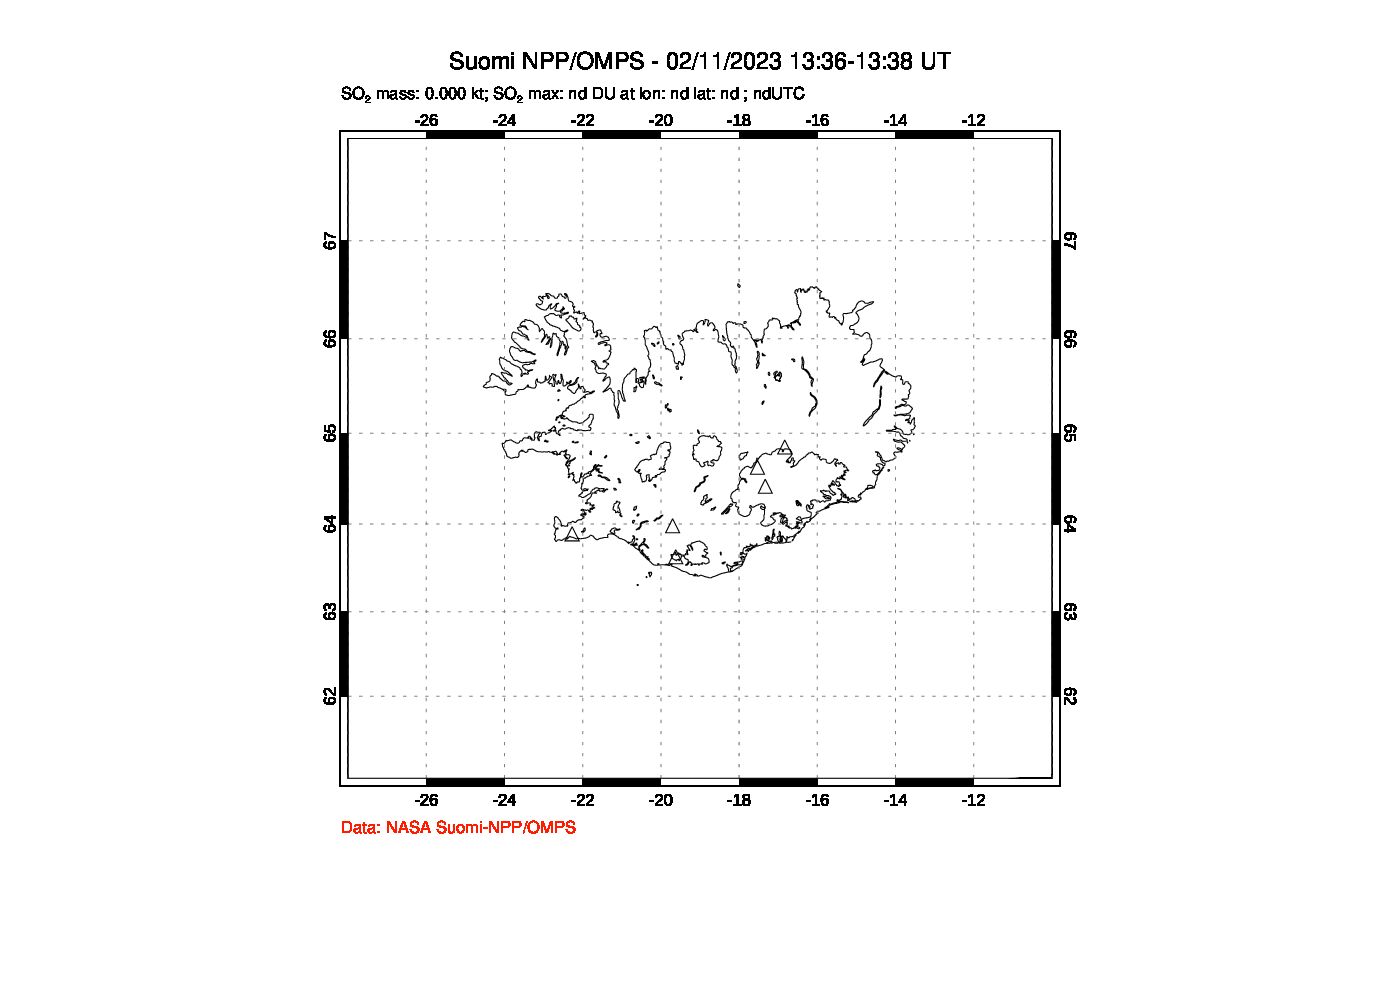 A sulfur dioxide image over Iceland on Feb 11, 2023.